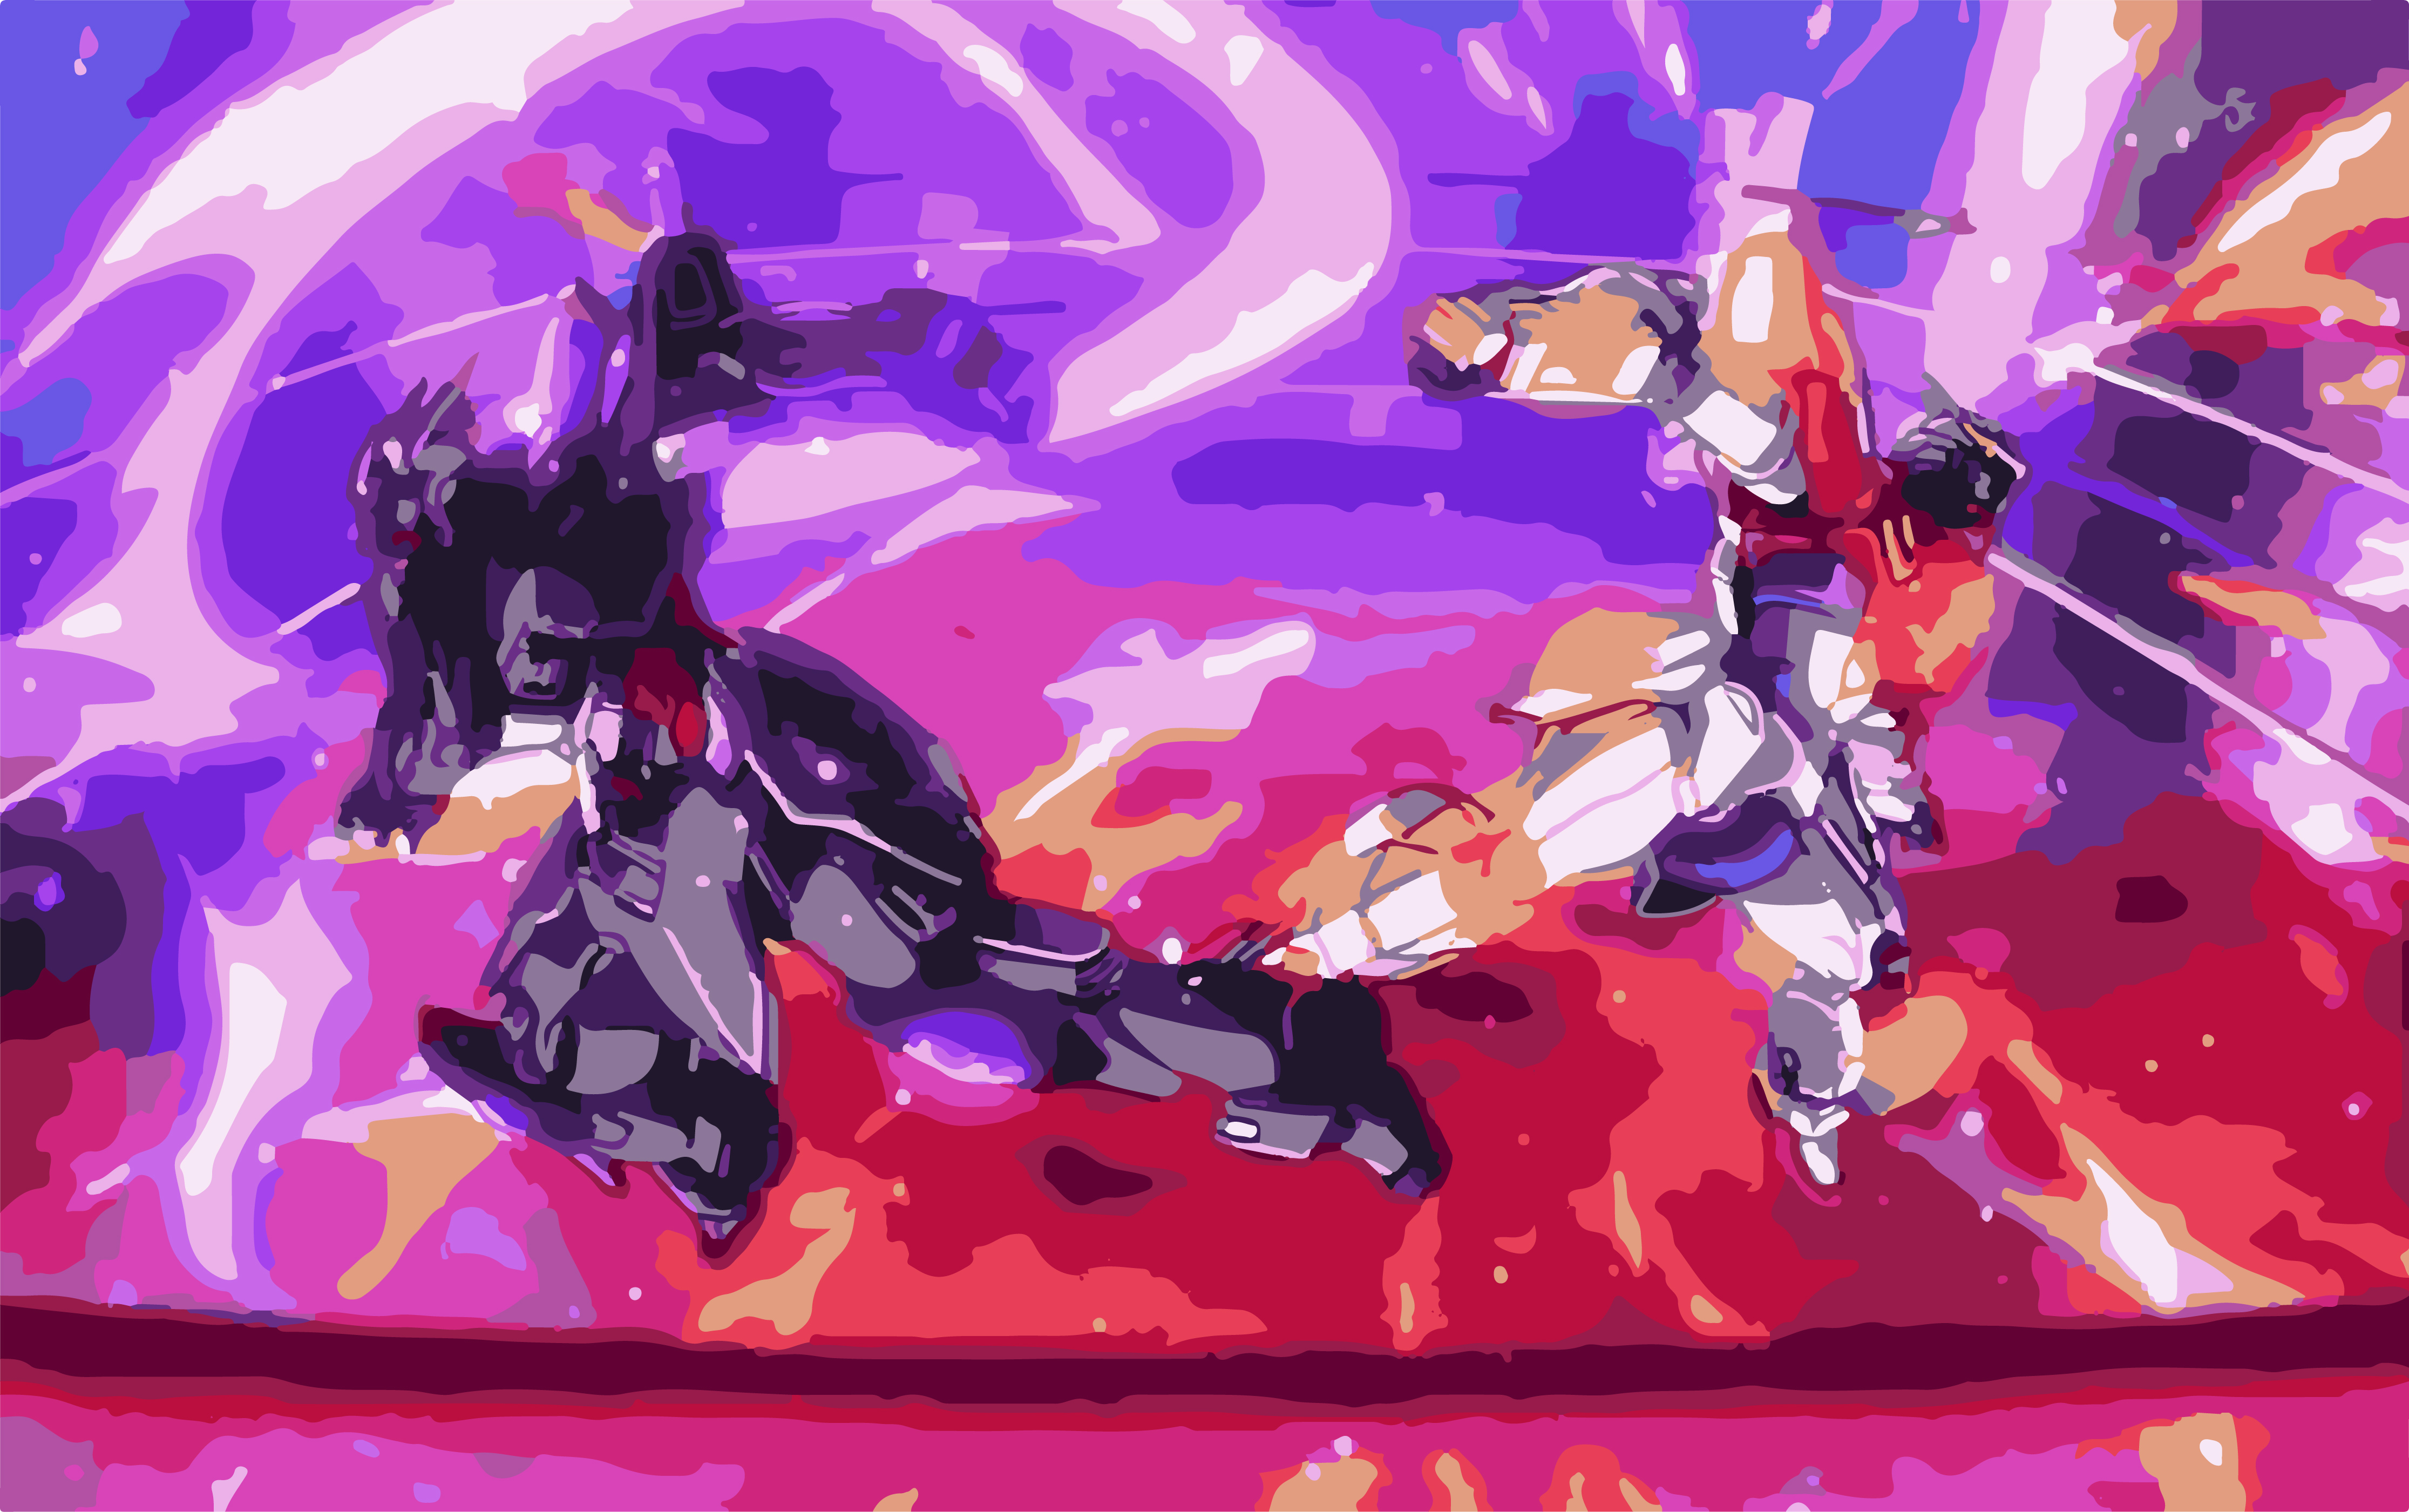 Anime Mobile Suit Gundam HD Wallpaper | Background Image